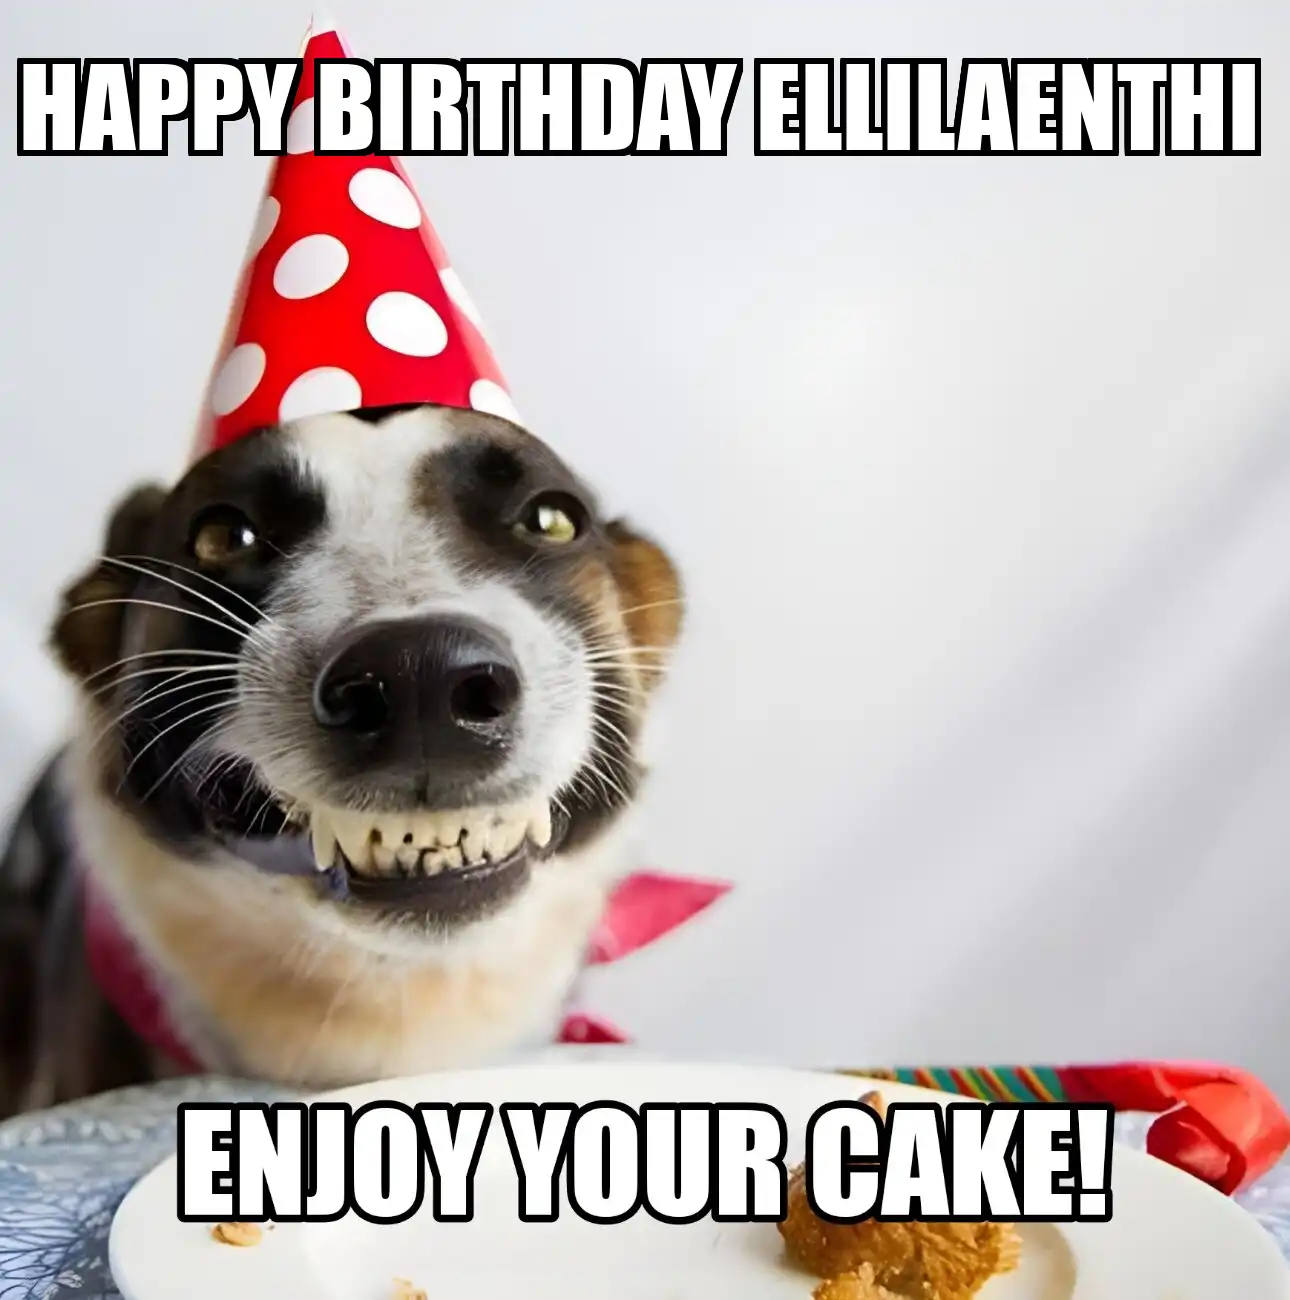 Happy Birthday Ellilaenthi Enjoy Your Cake Dog Meme